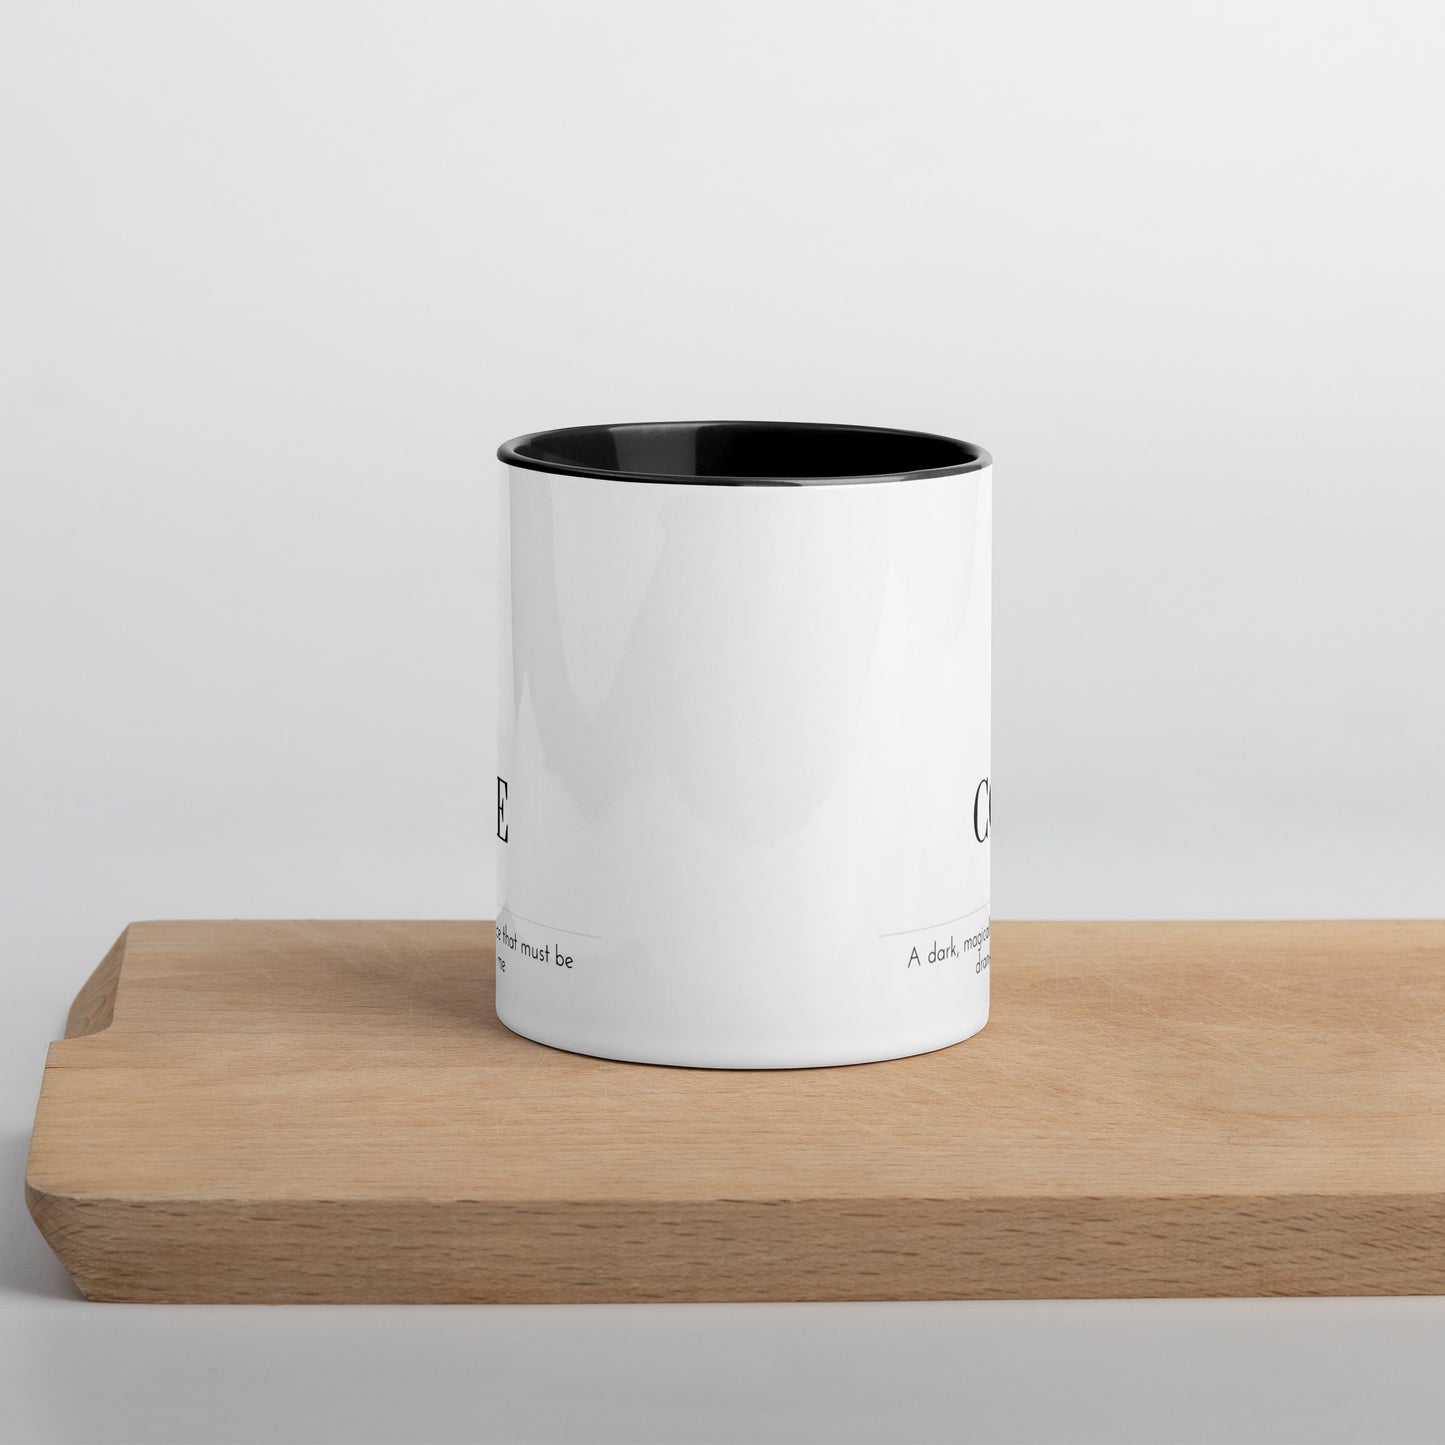 Coffee Definition | Ceramic Mug | 11oz